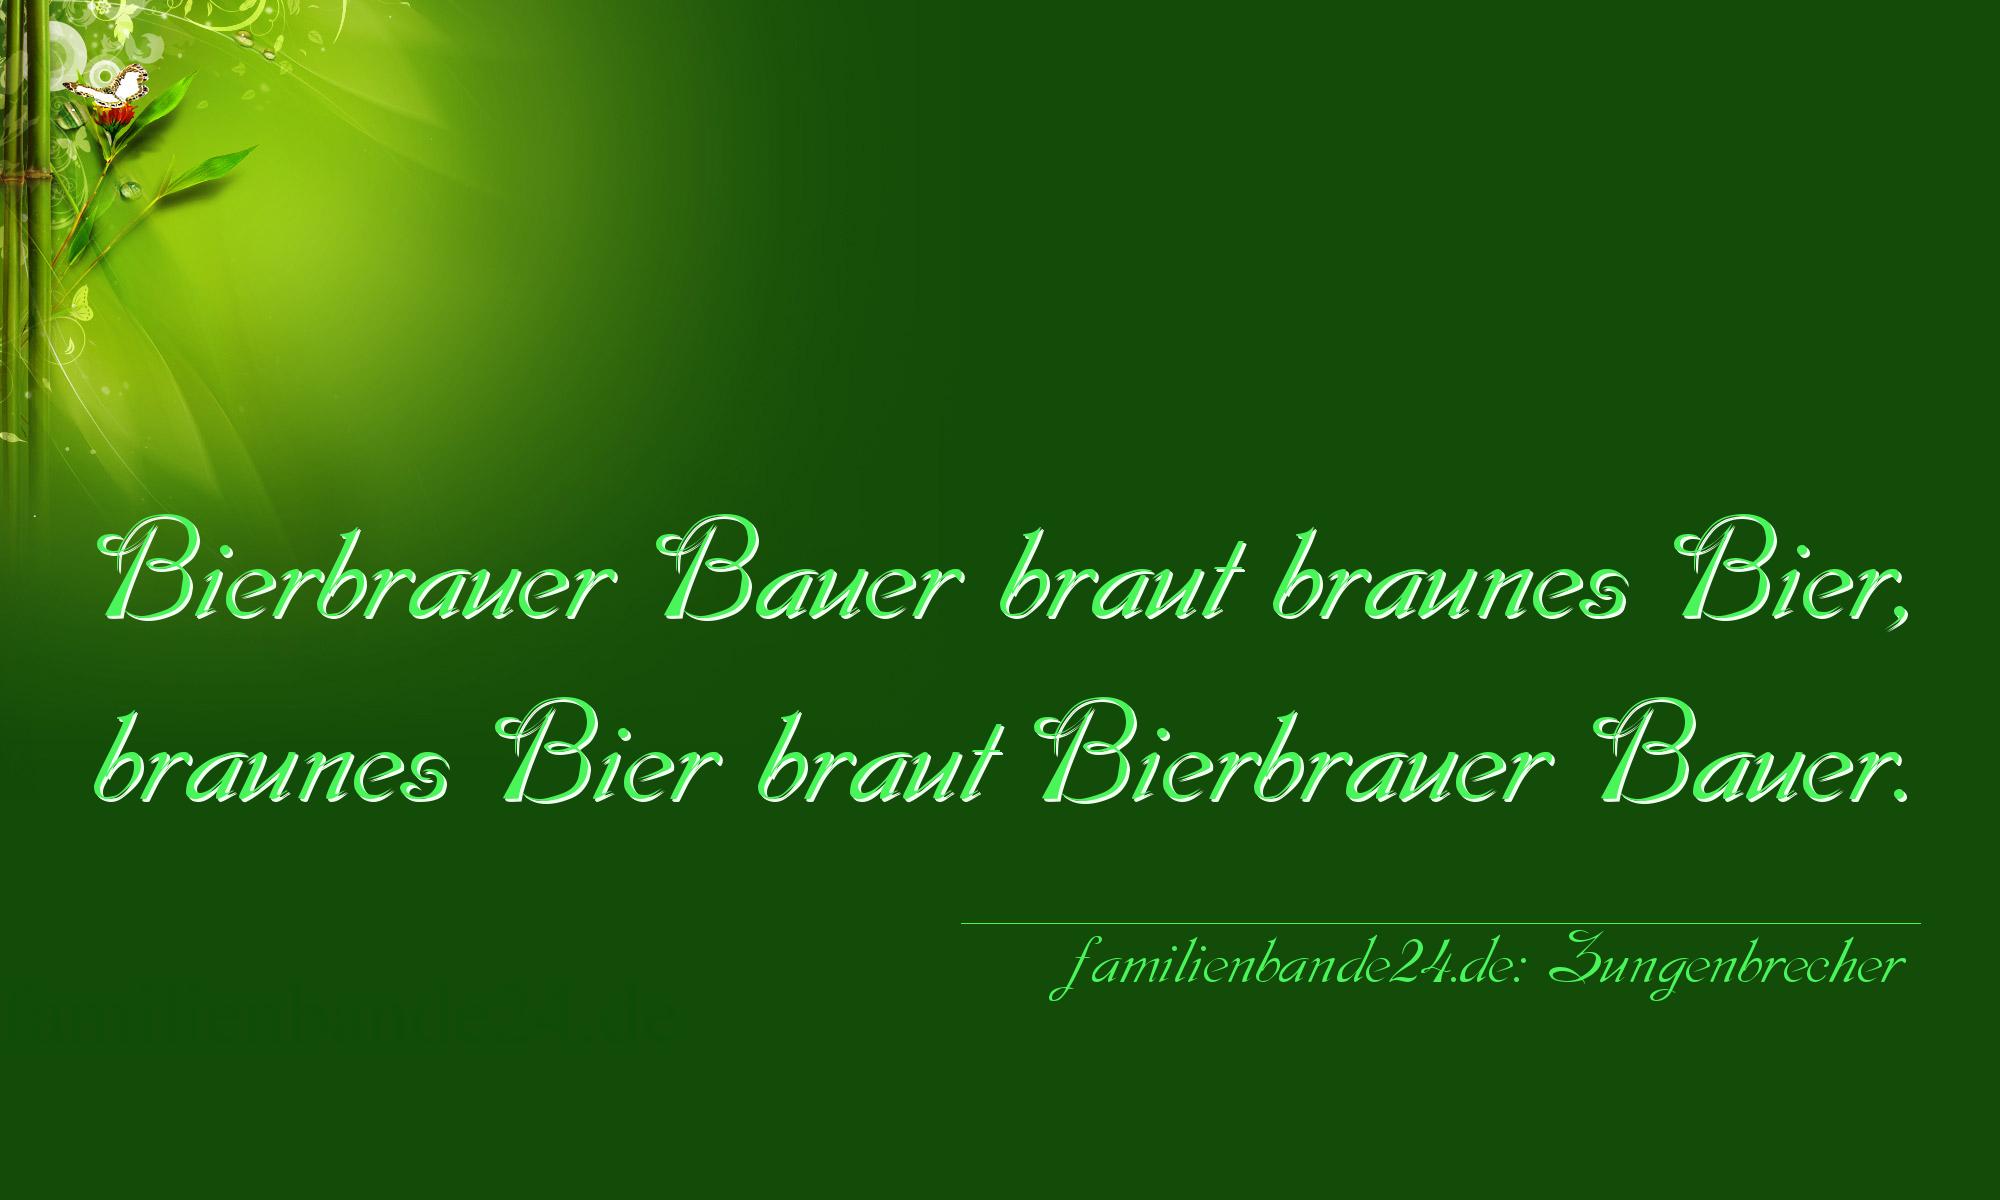 Zungenbrecher Nr. 690: Bierbrauer Bauer braut braunes Bier, braunes Bier braut Bi [...]